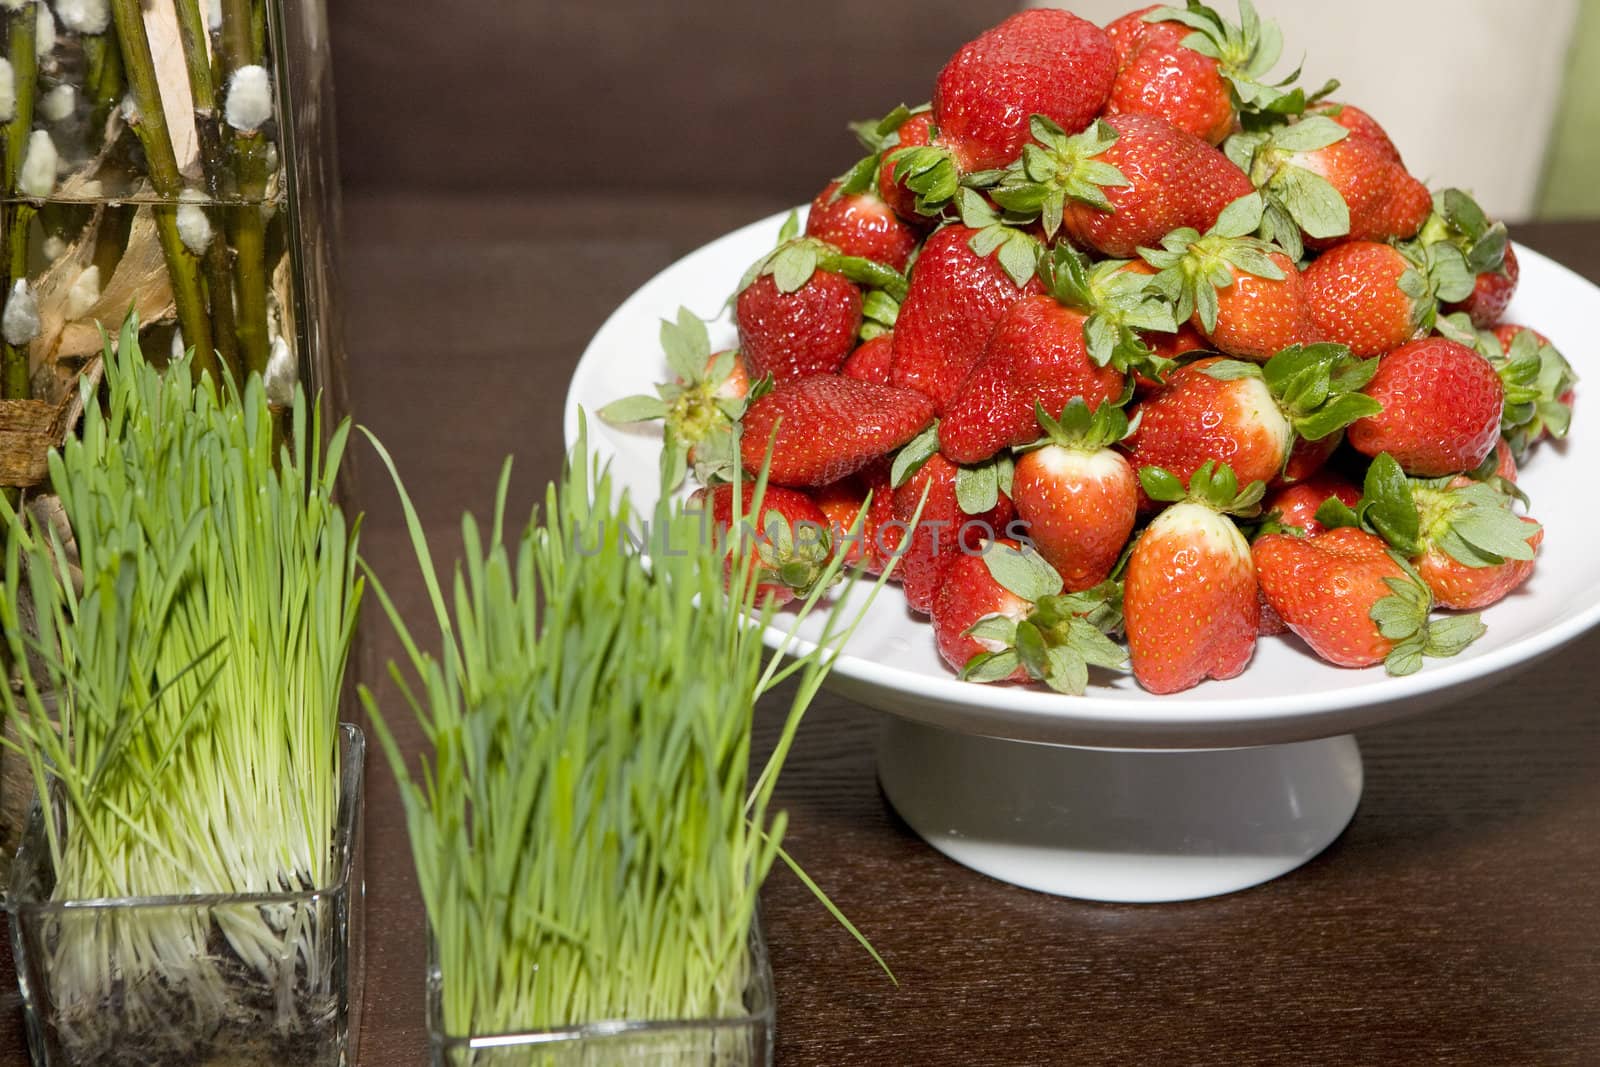 strawberries  in vase on table  by elenarostunova